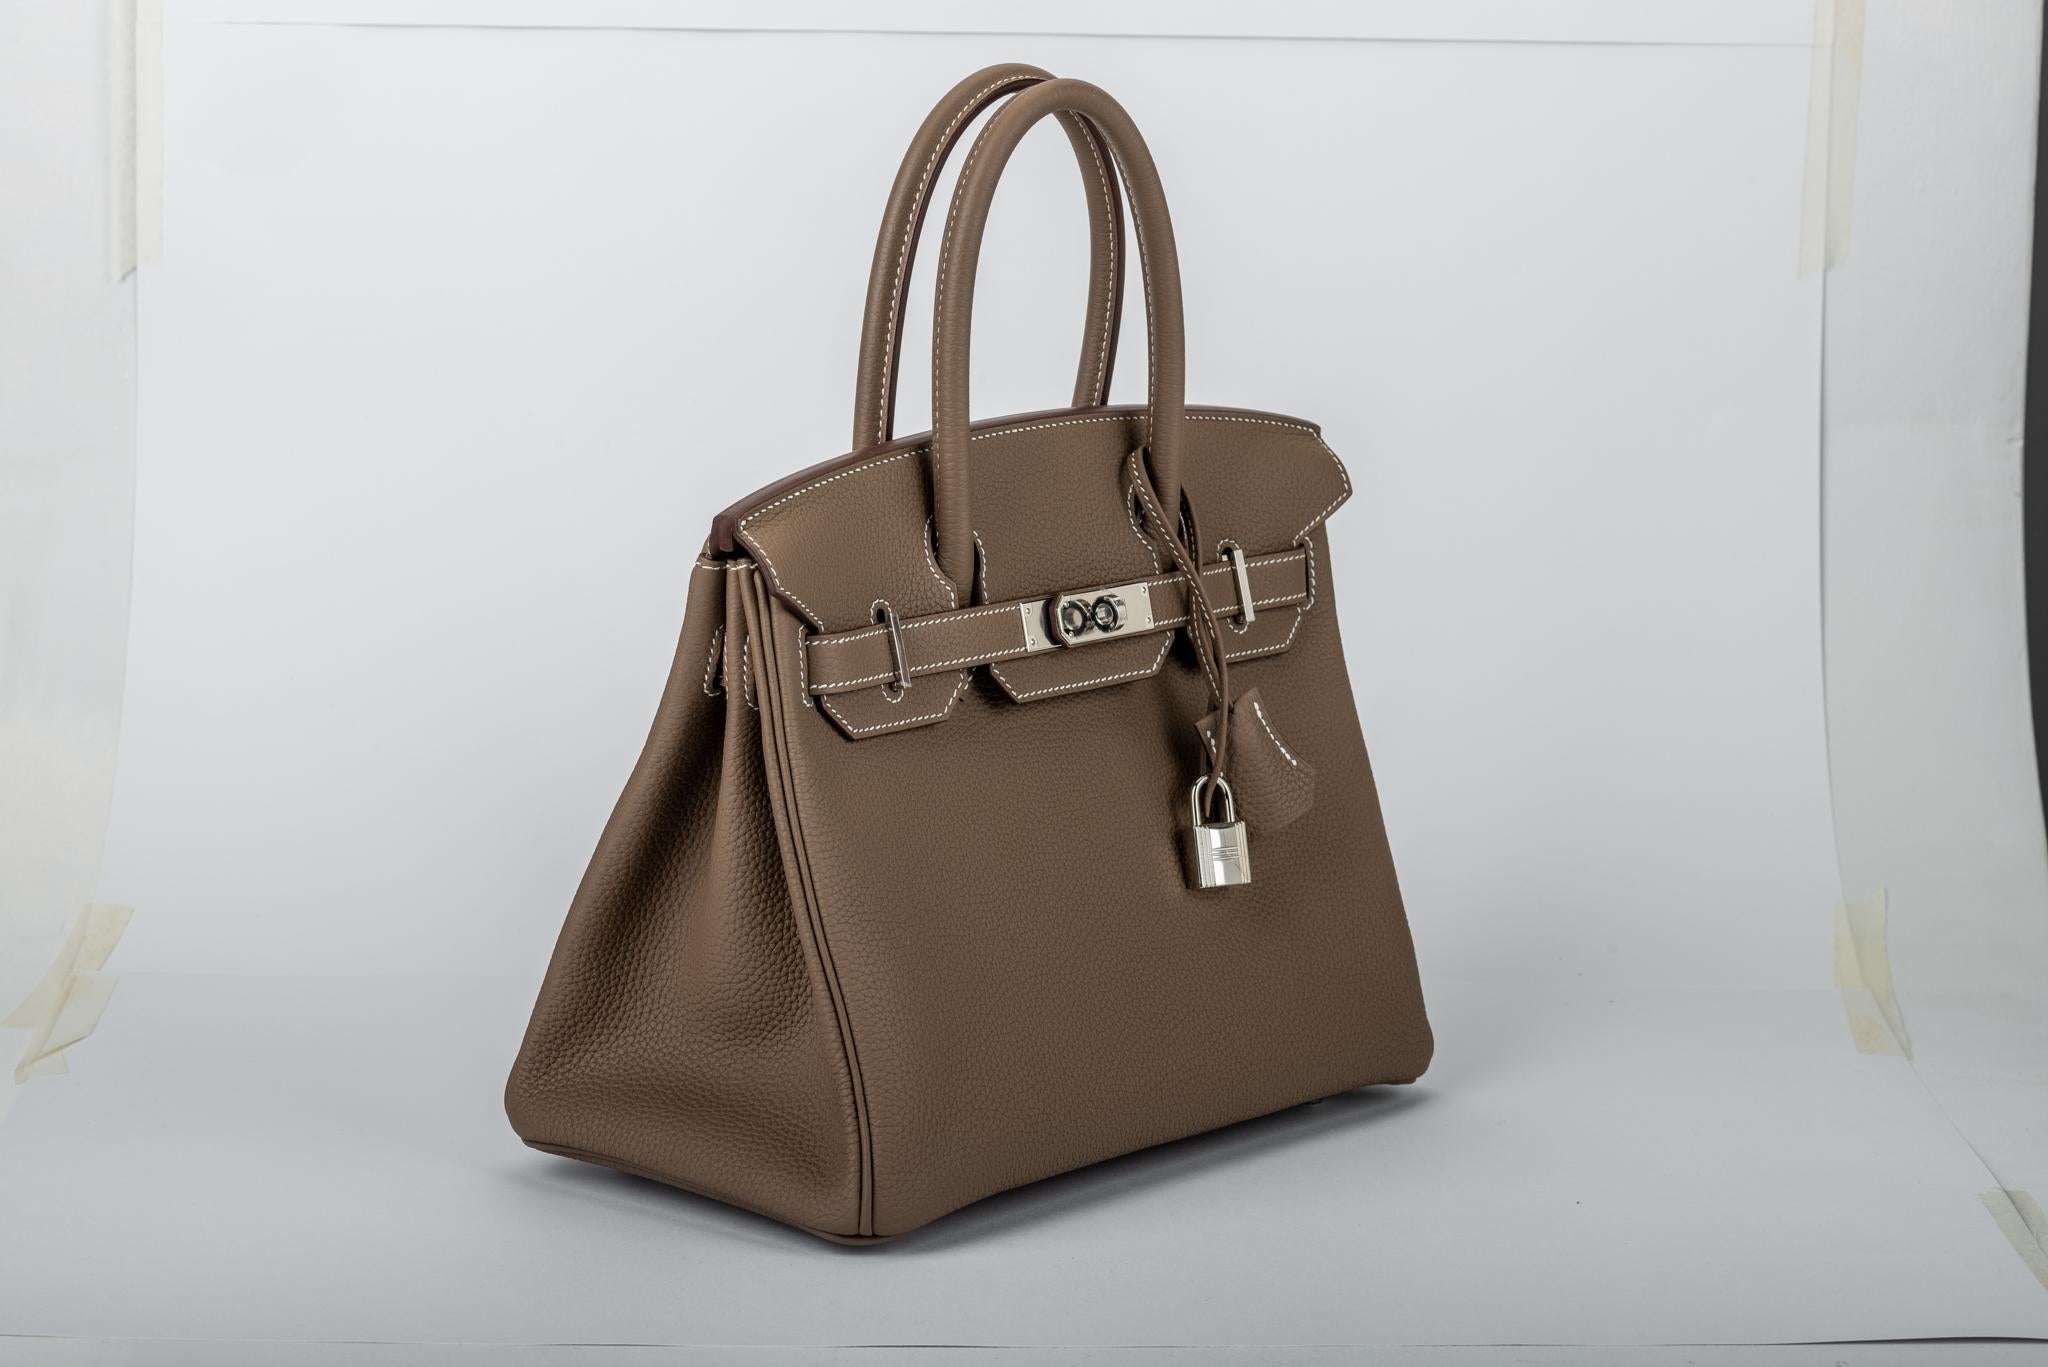 Brand new in Box Hermès 30cm birkin bag in etoupe togo leather and palladium hardware. Handle drop, 3